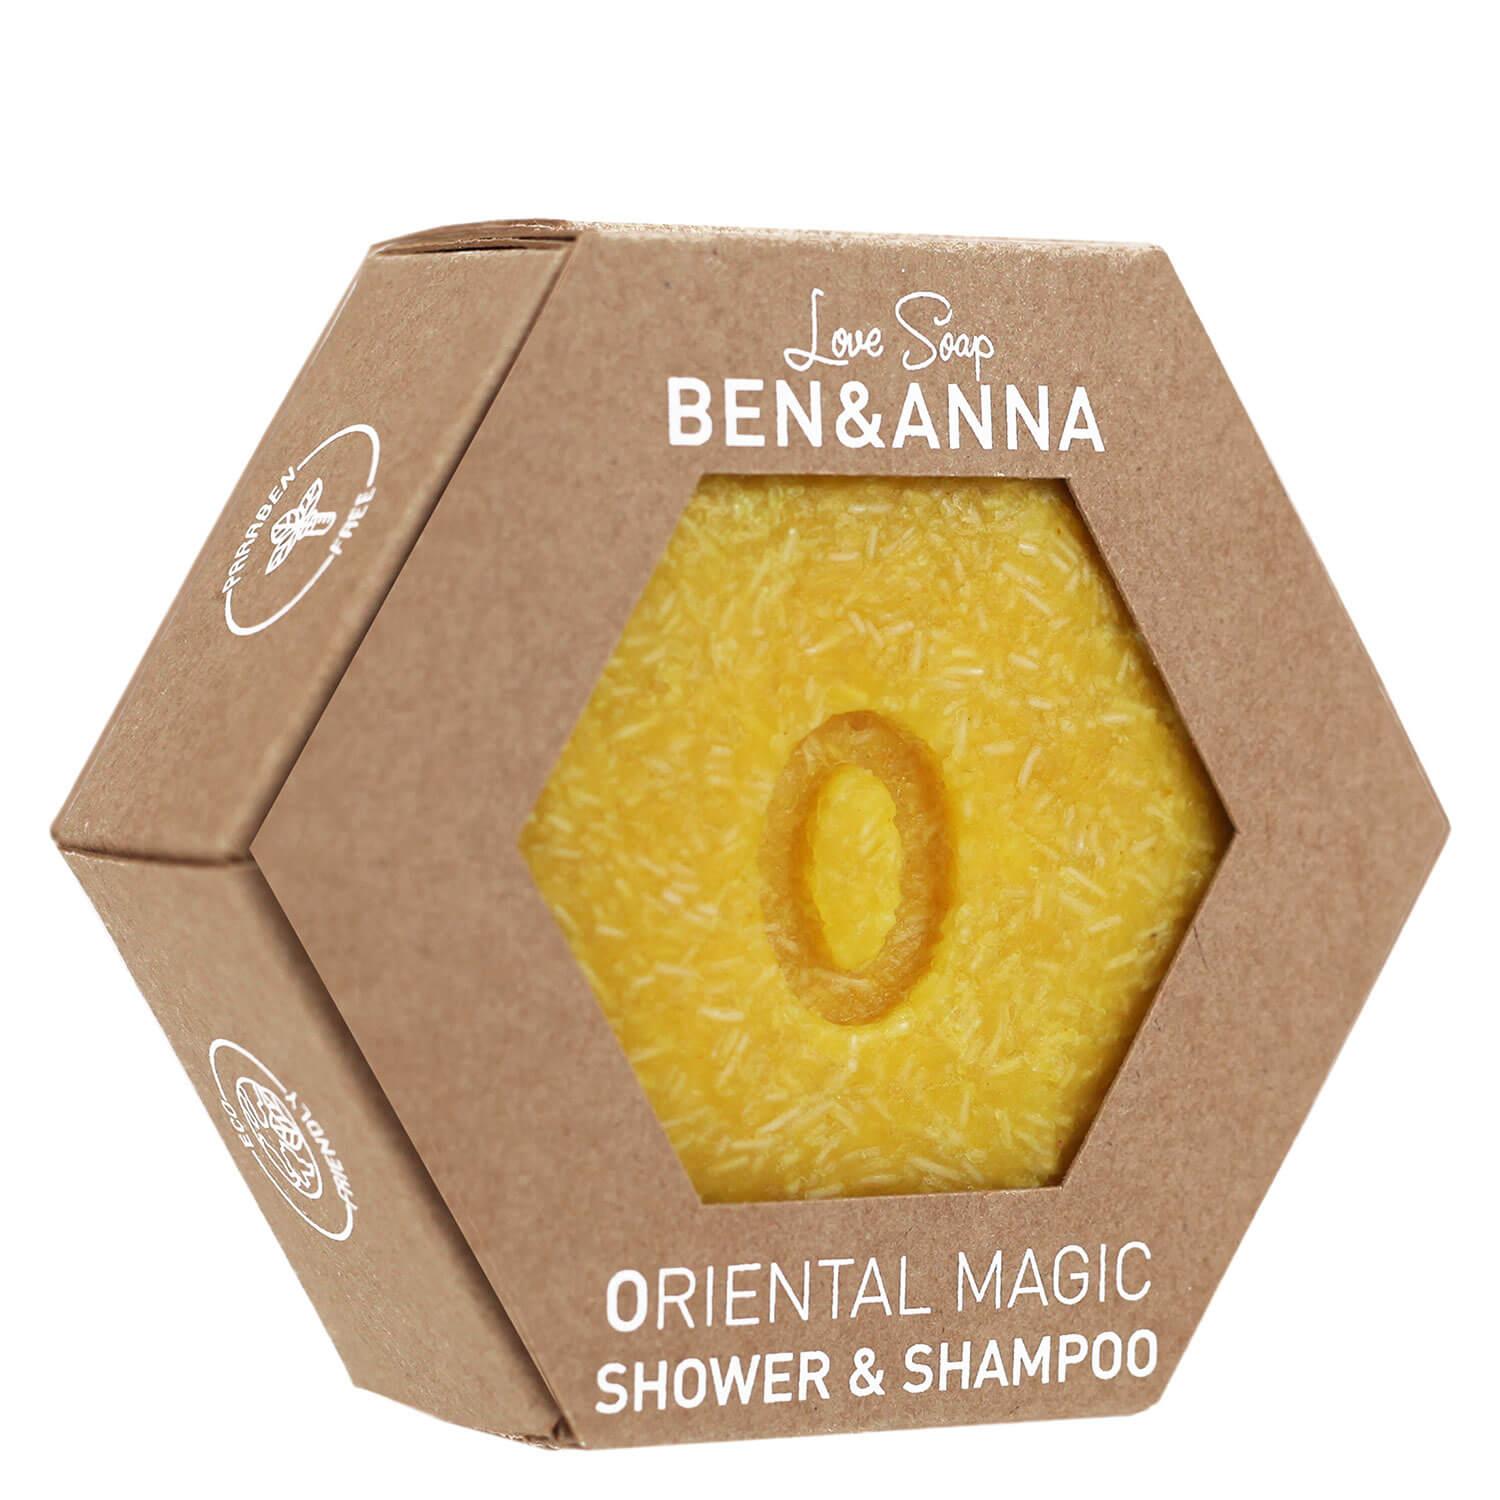 BEN&ANNA - Oriental Magic Shower & Shampoo